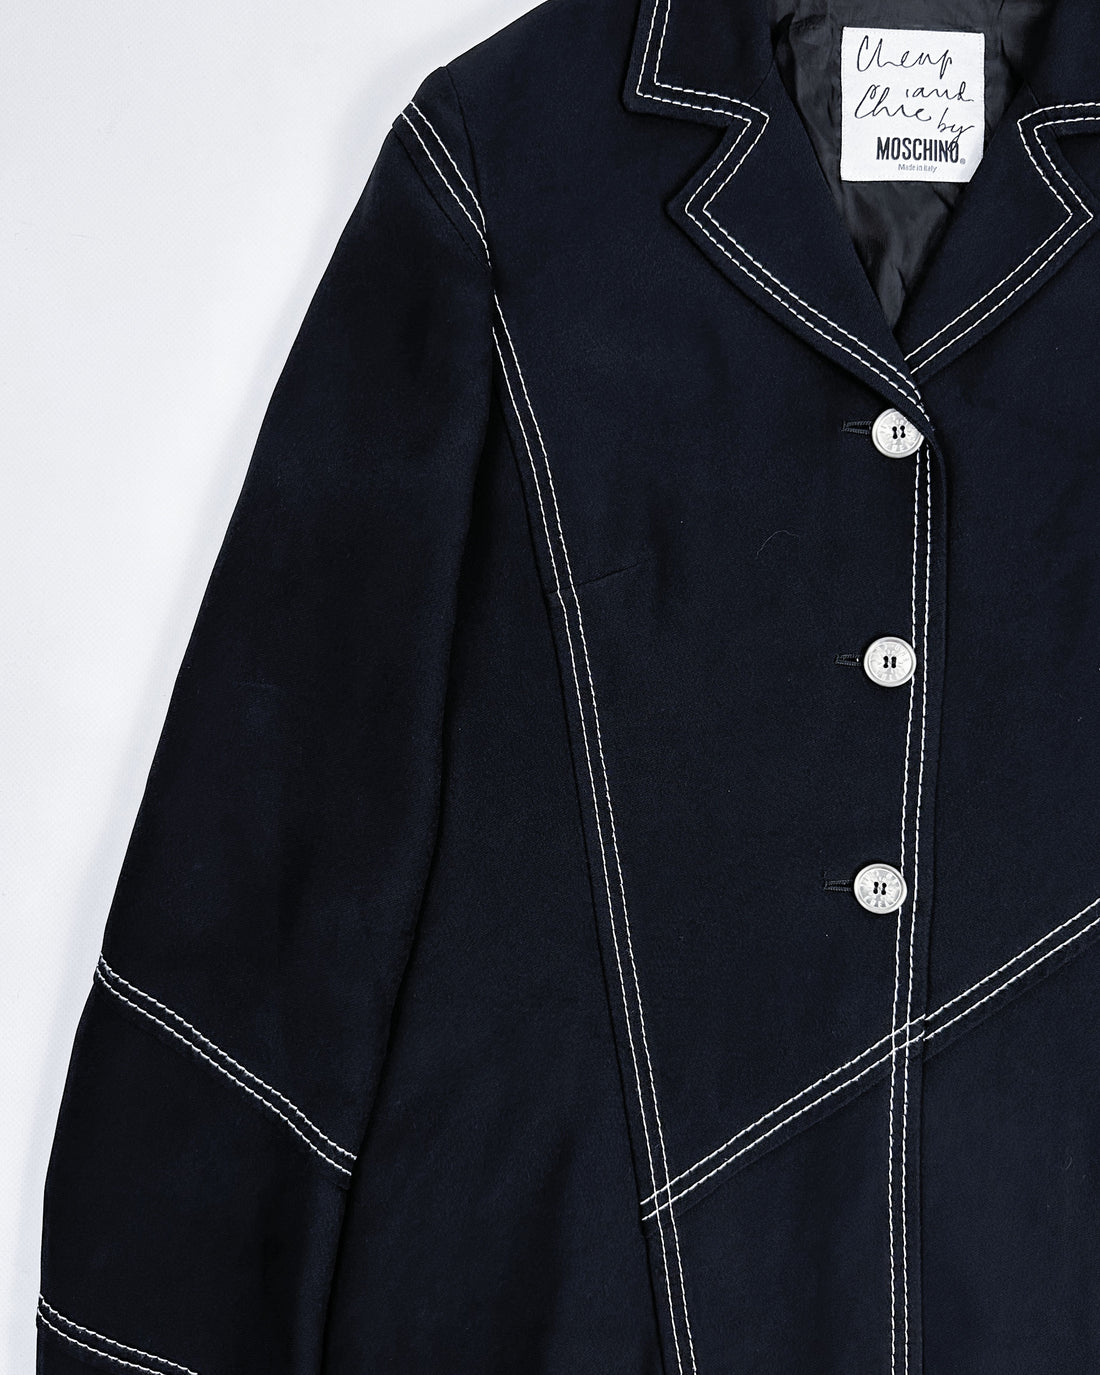 Moschino Black Stitched 3-Button Jacket 1990's